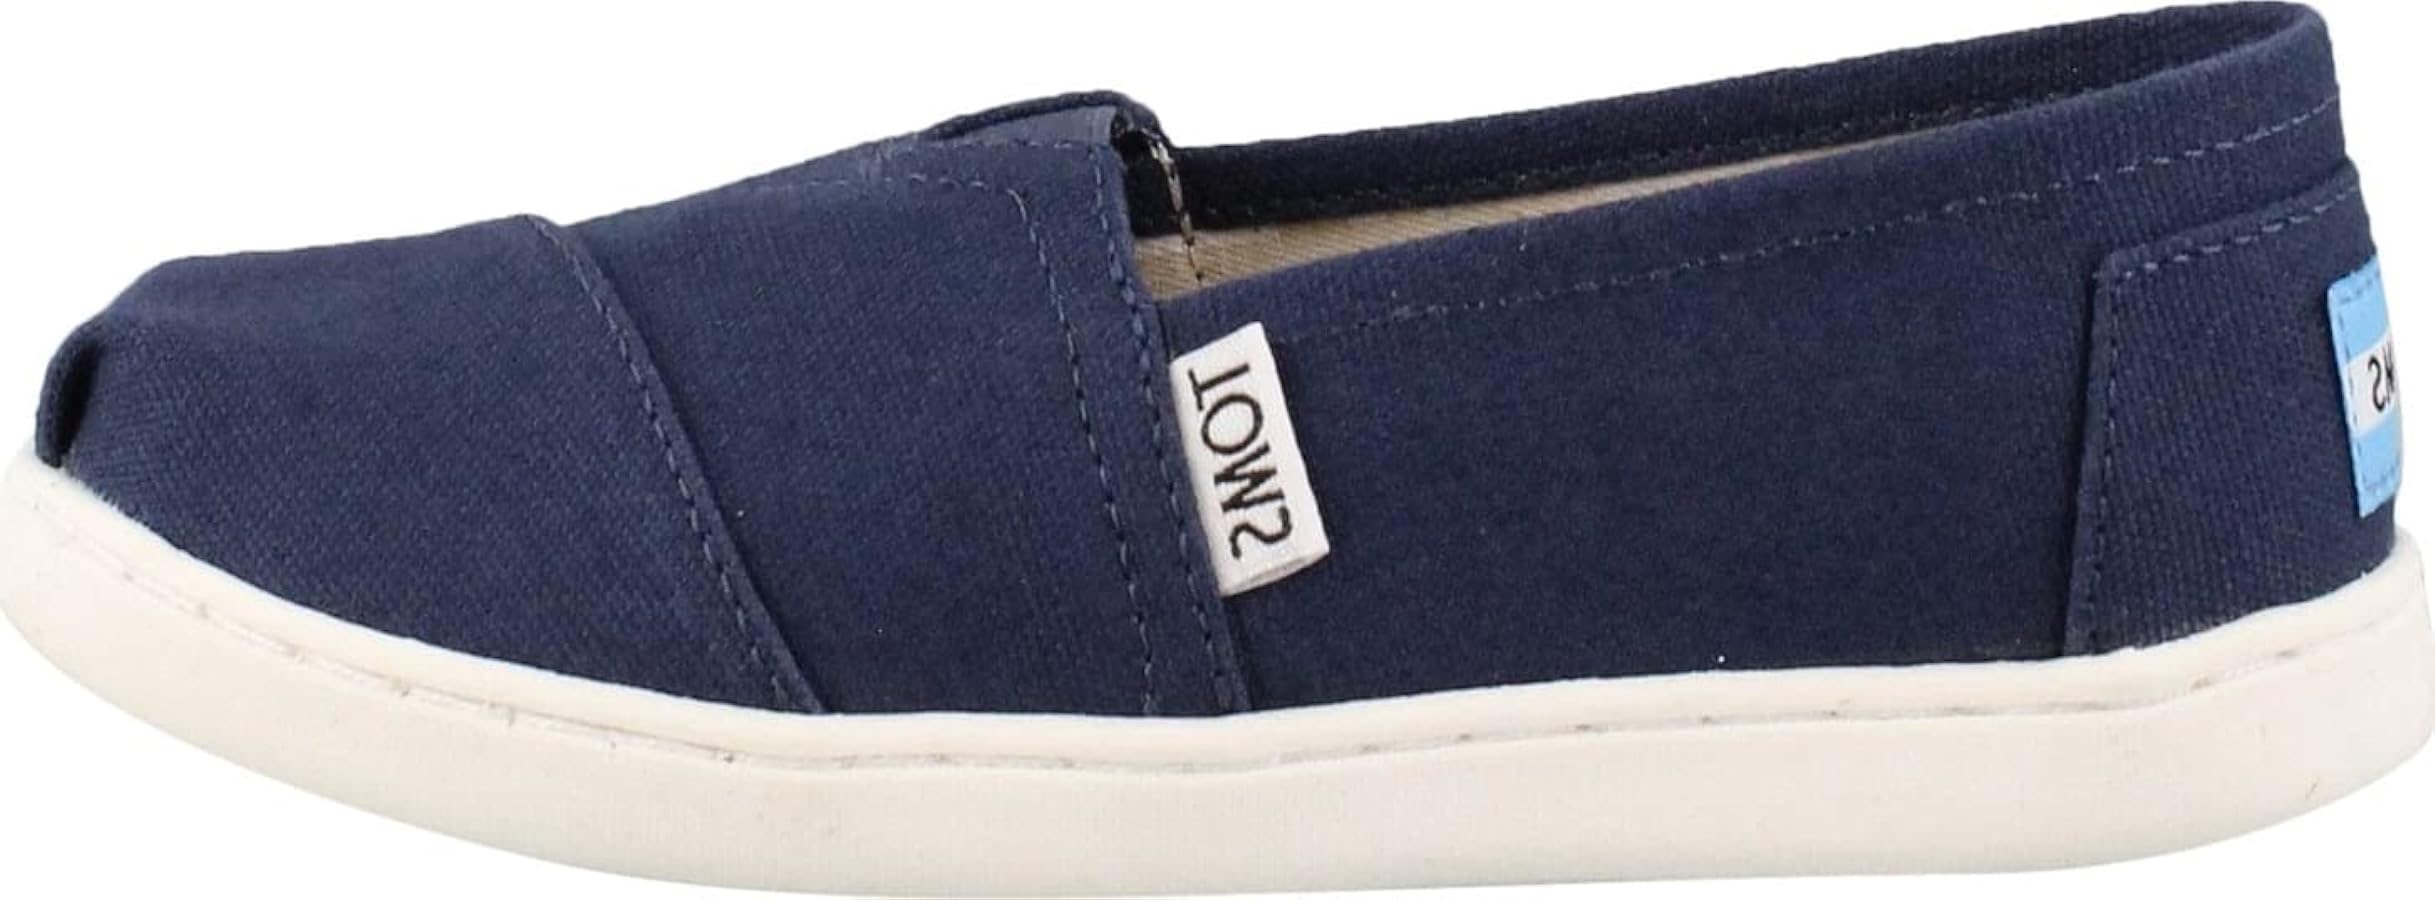 Amazon.com | TOMS Unisex-Child Espadrille Sneaker, Navy, 3.5 Big Kid | Loafers